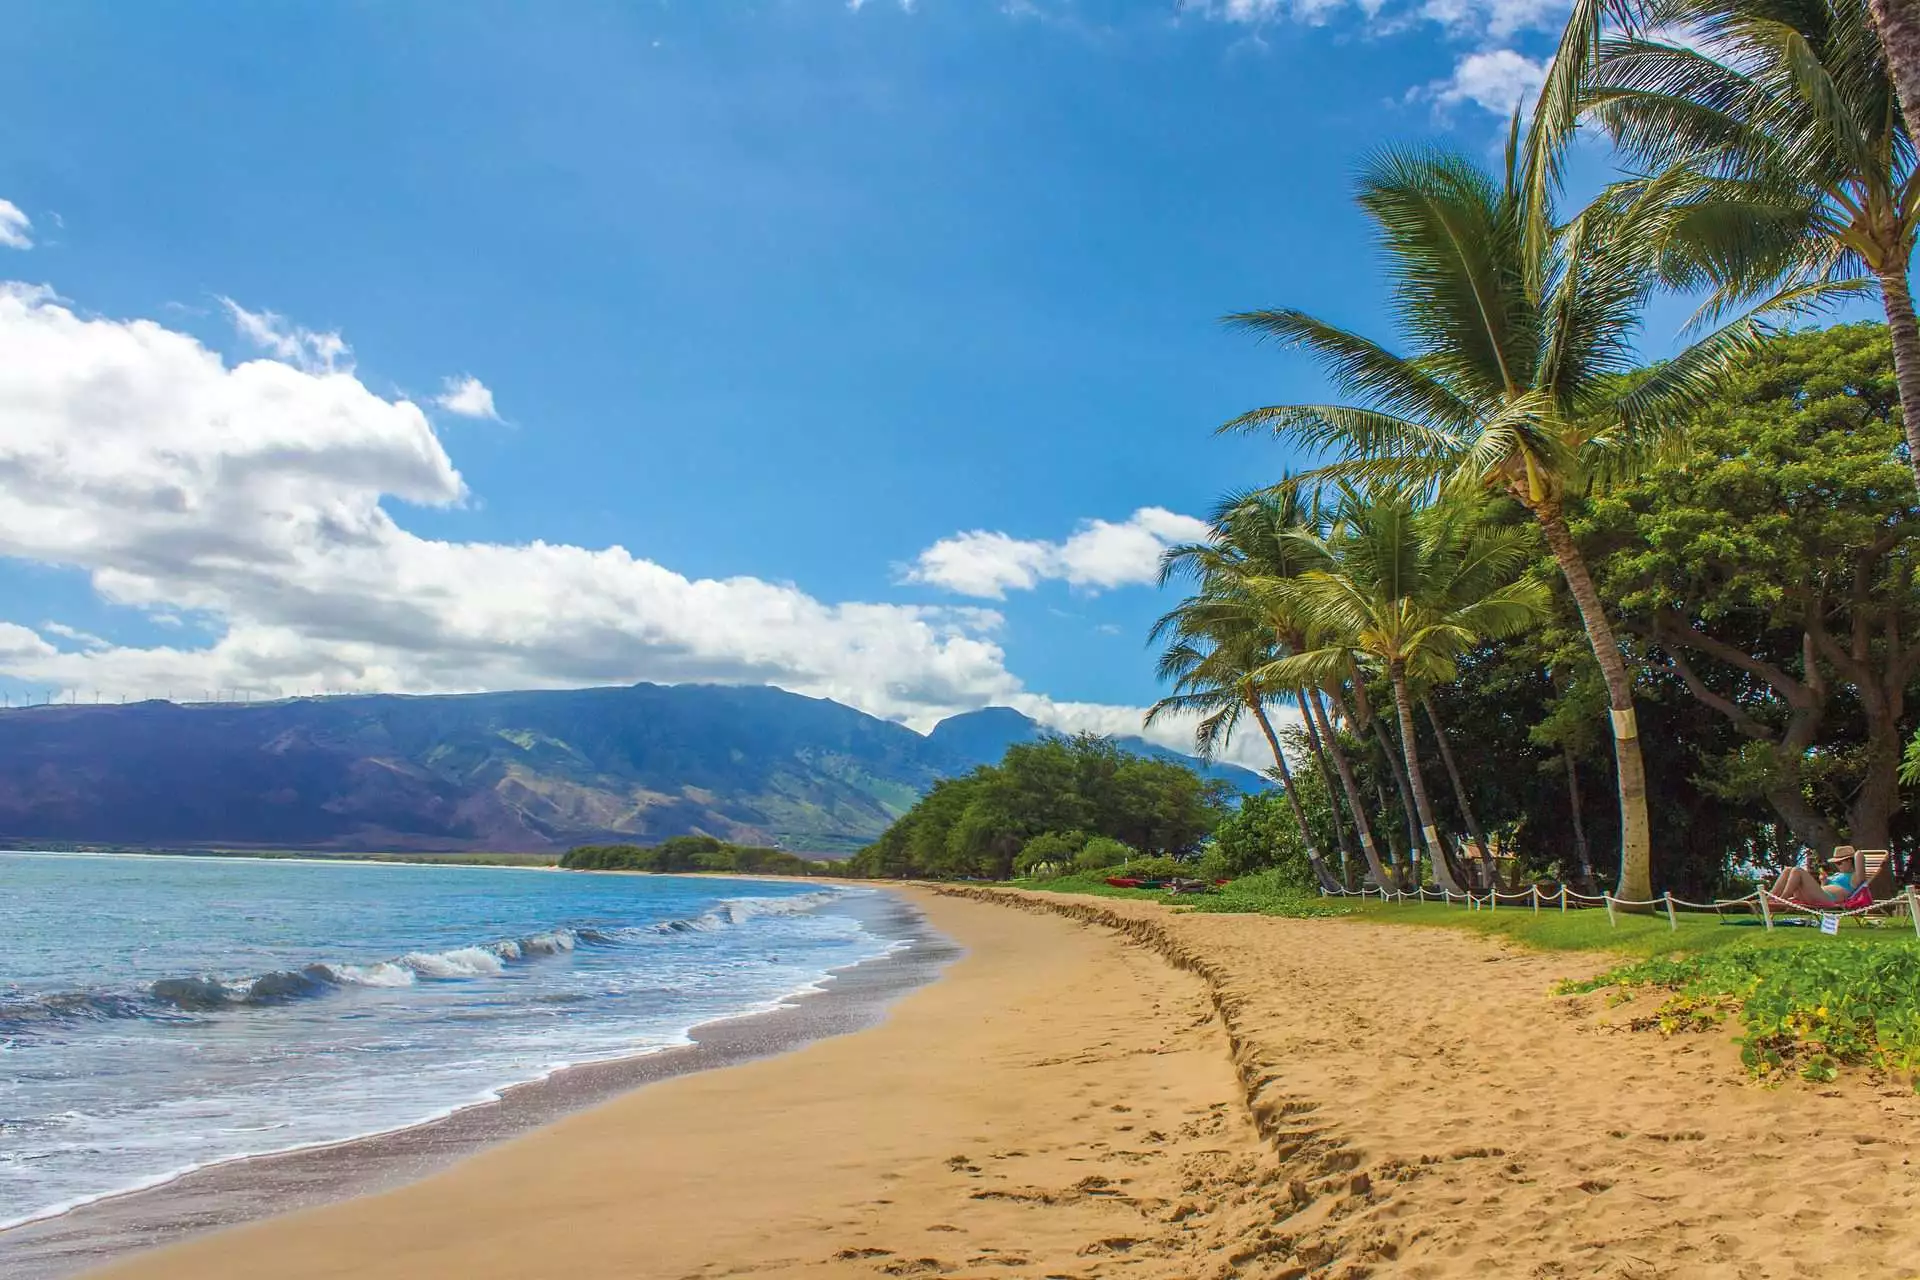 A beautiful beach in hawaii